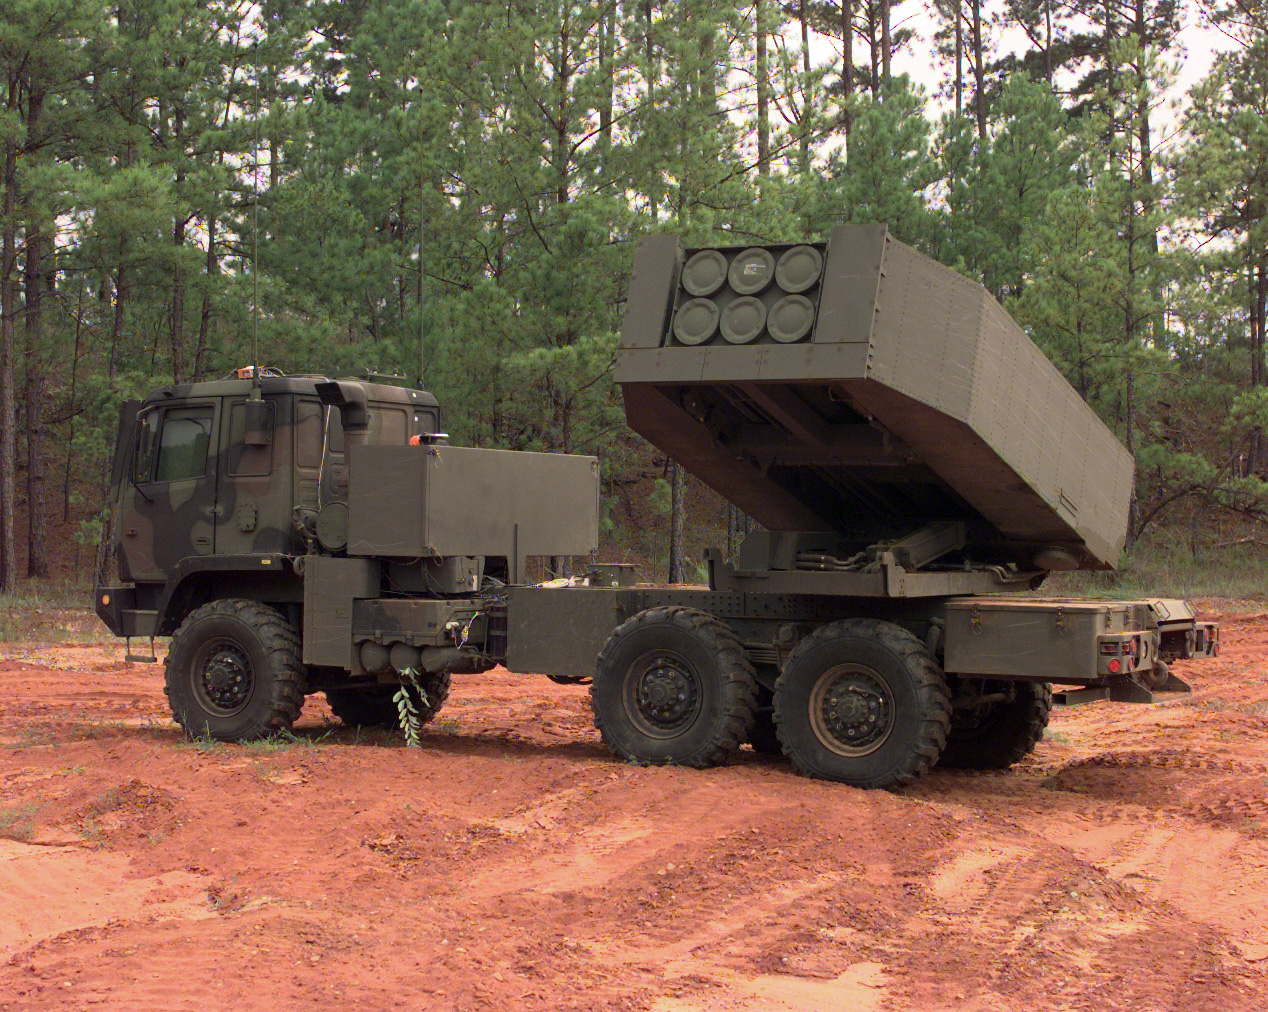 High Mobility Artillery Rocket System (HIMARS)  - Kép forrása: U.S. Army / Spc. Russell J. Good